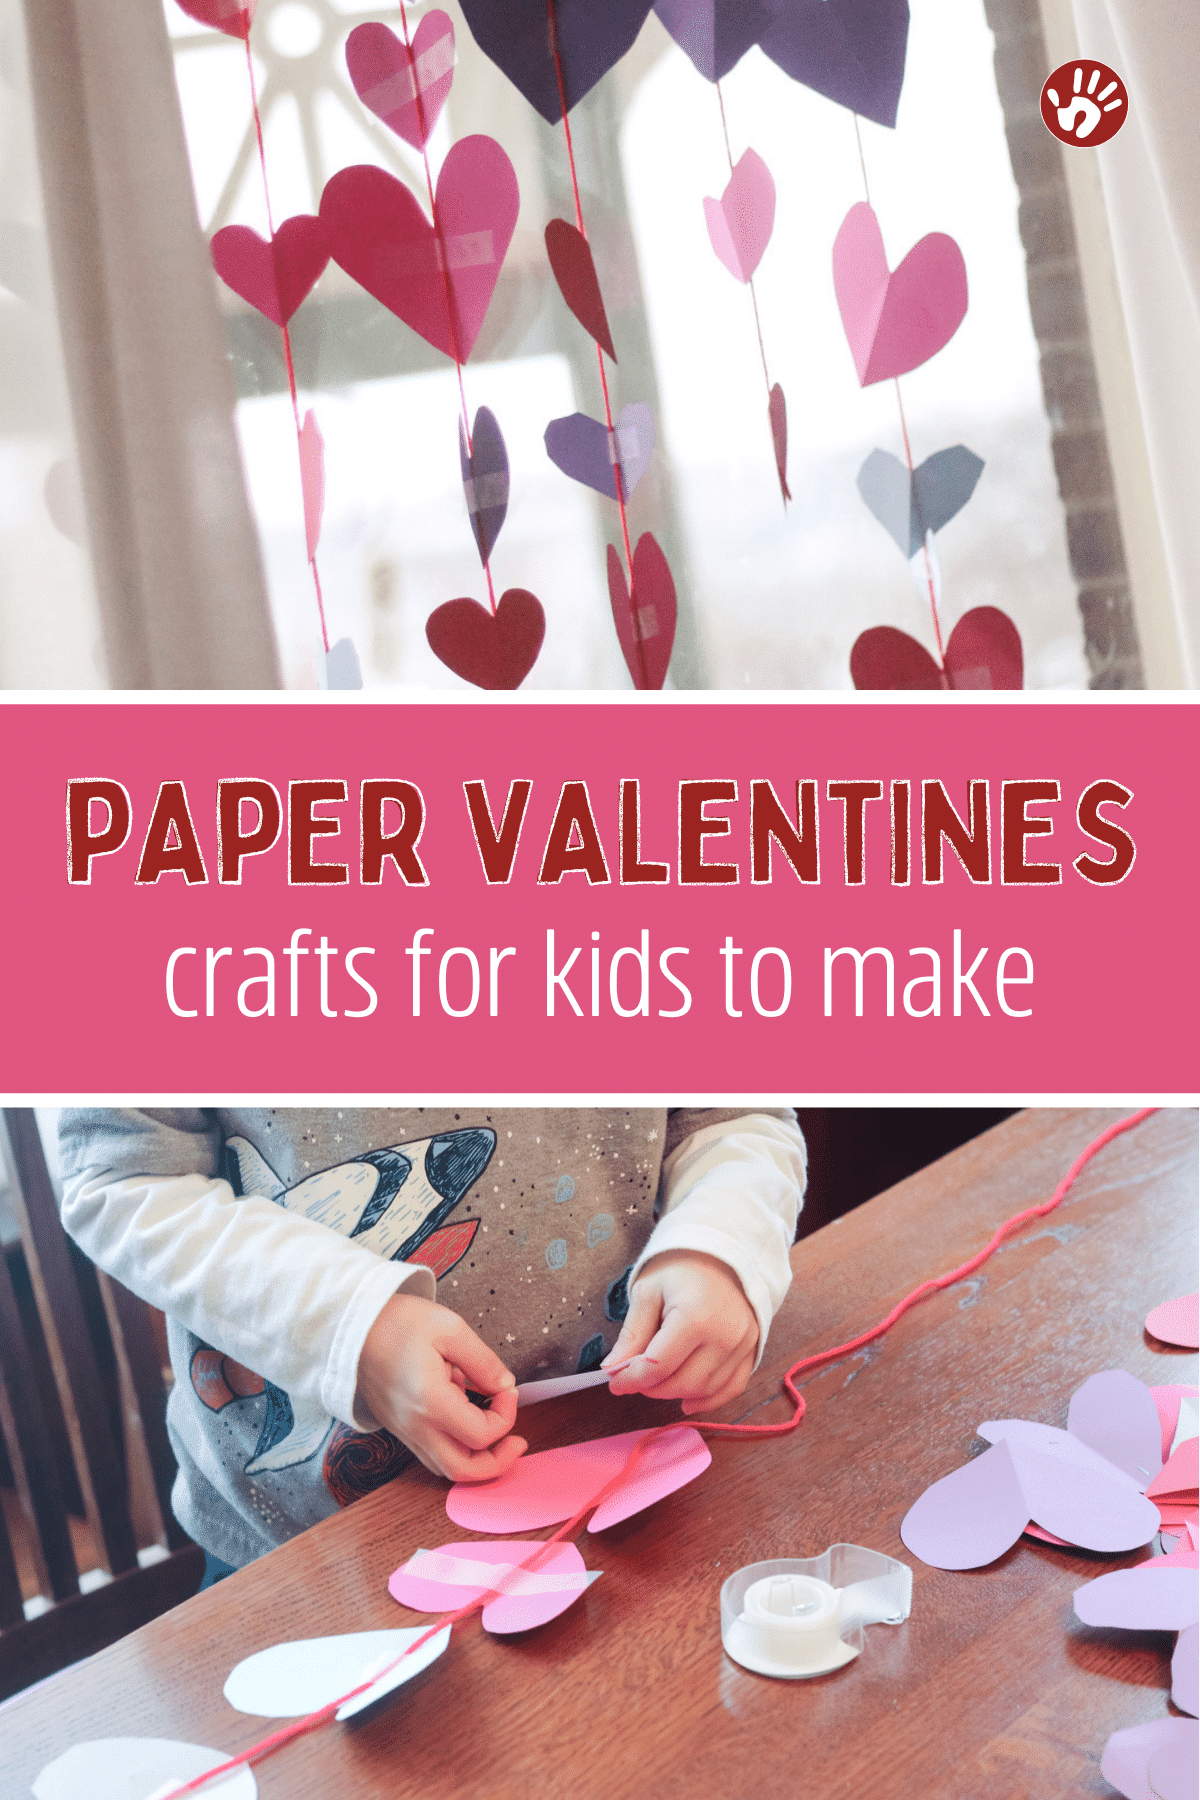 Easy Valentine's Day Craft For Kids - Tissue Paper Heart